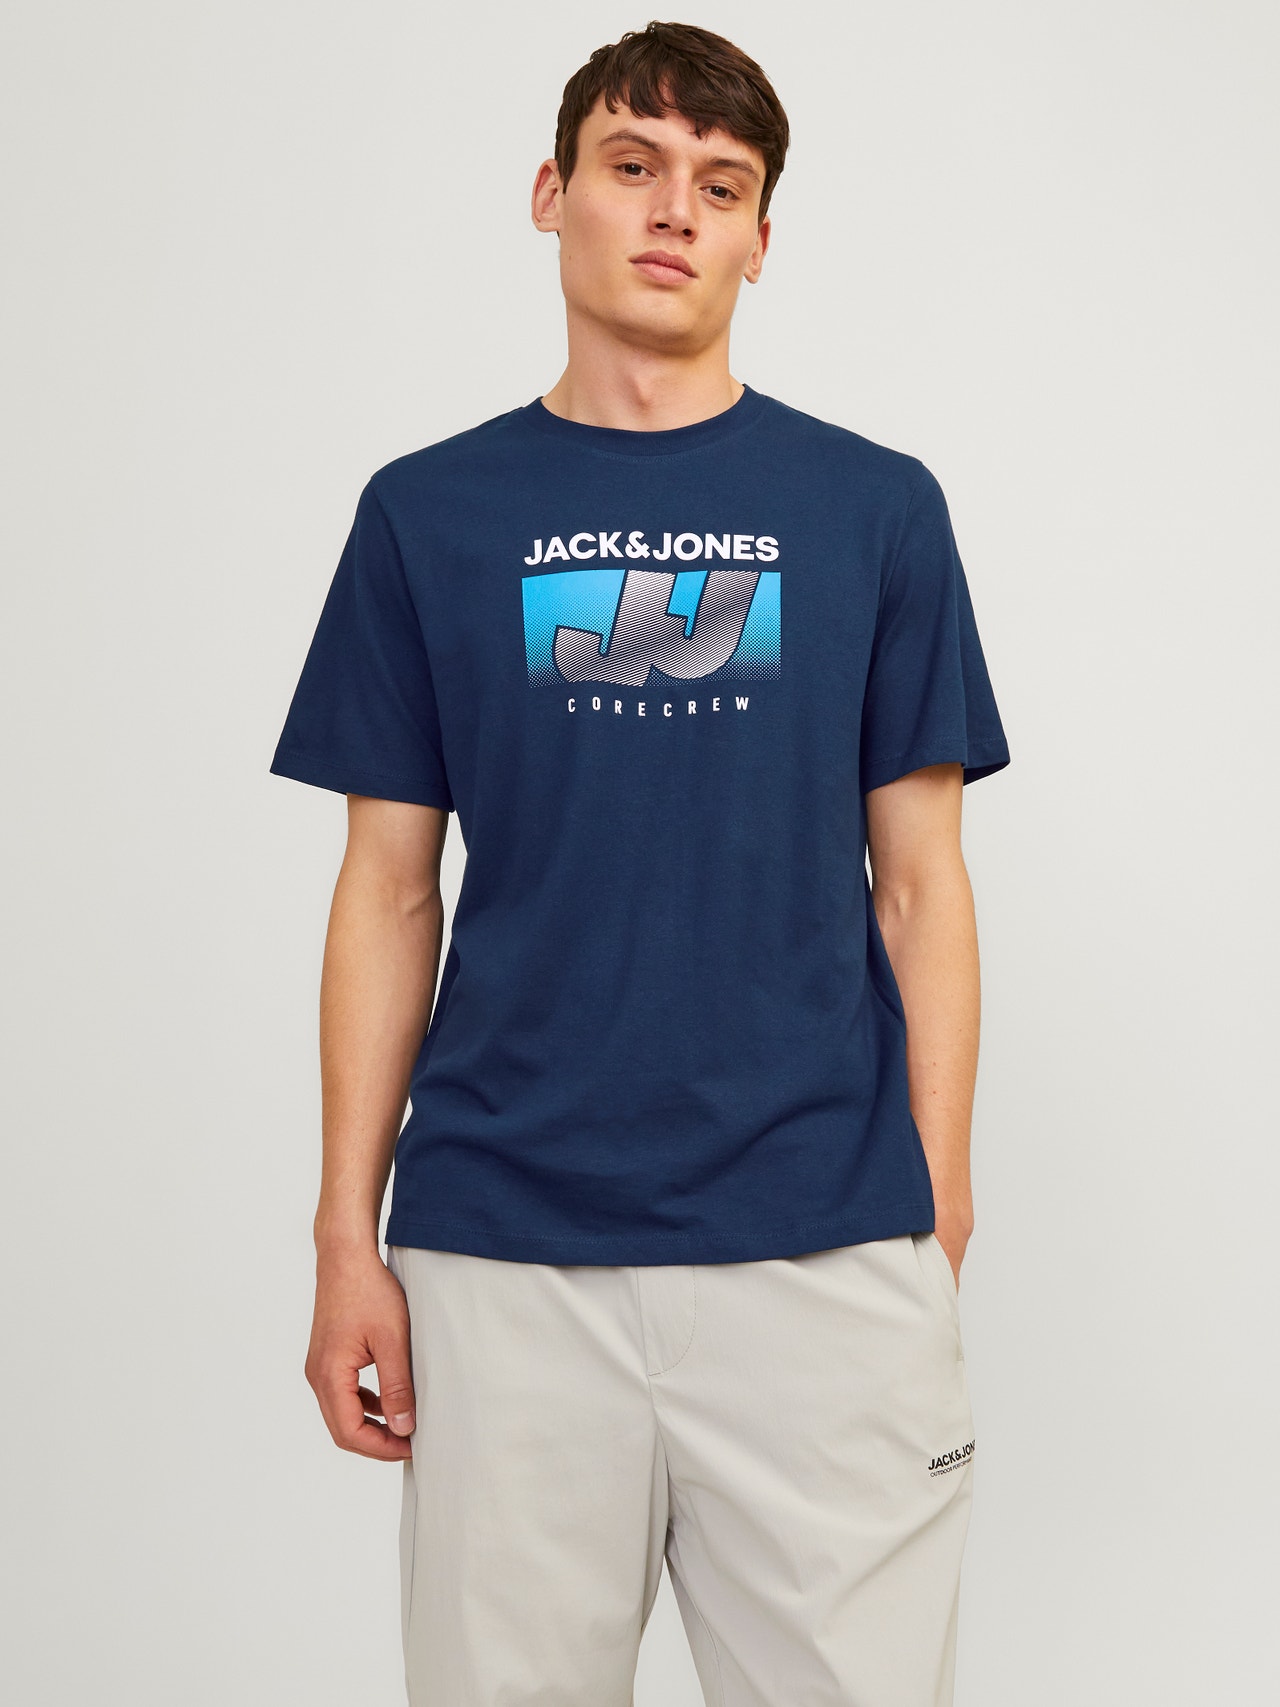 Jack & Jones Printed Crew neck T-shirt -Navy Blazer - 12255028